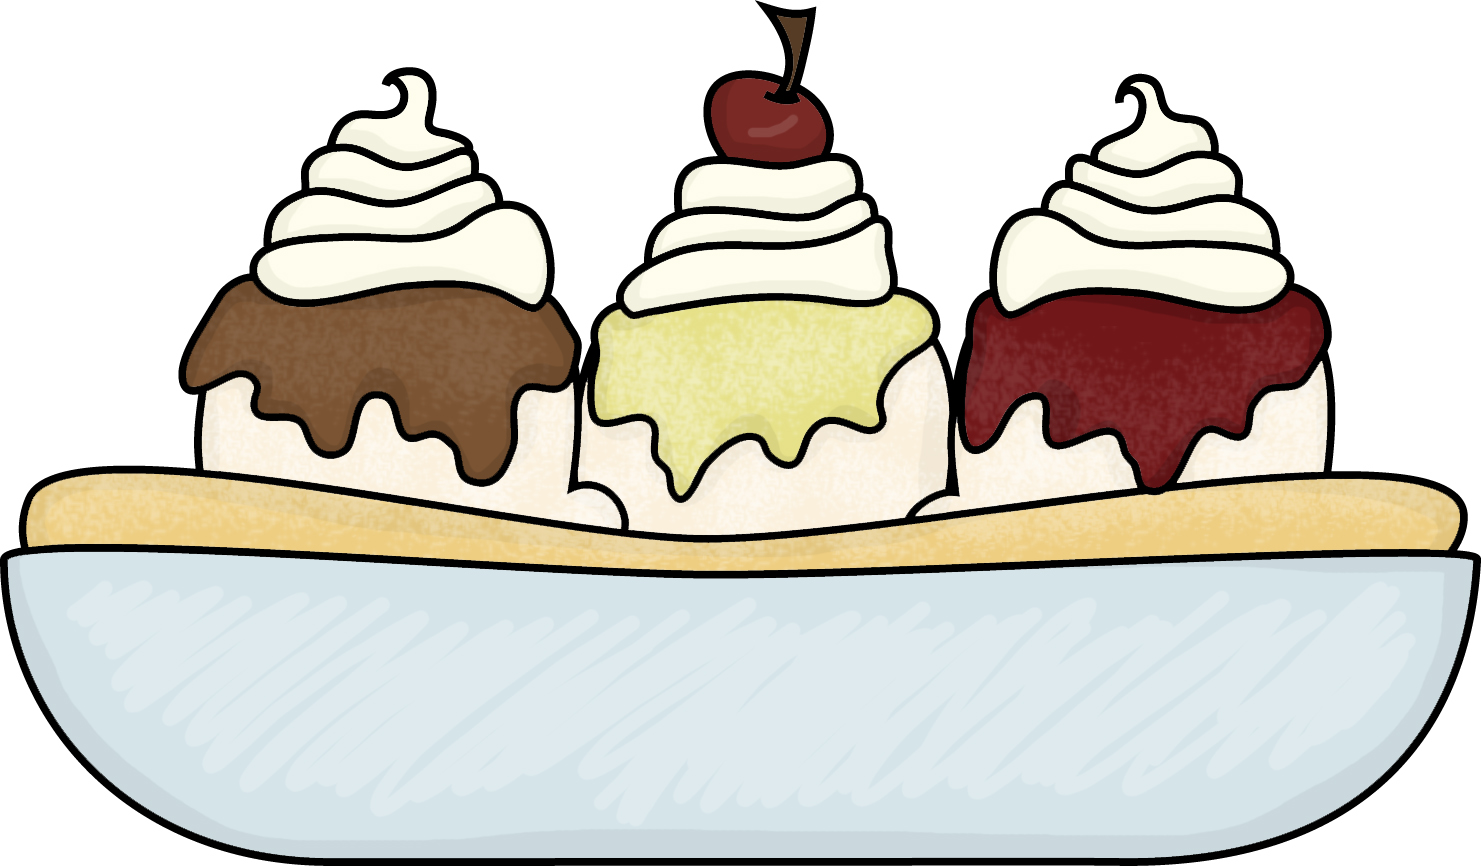 ice cream cake clipart - photo #50